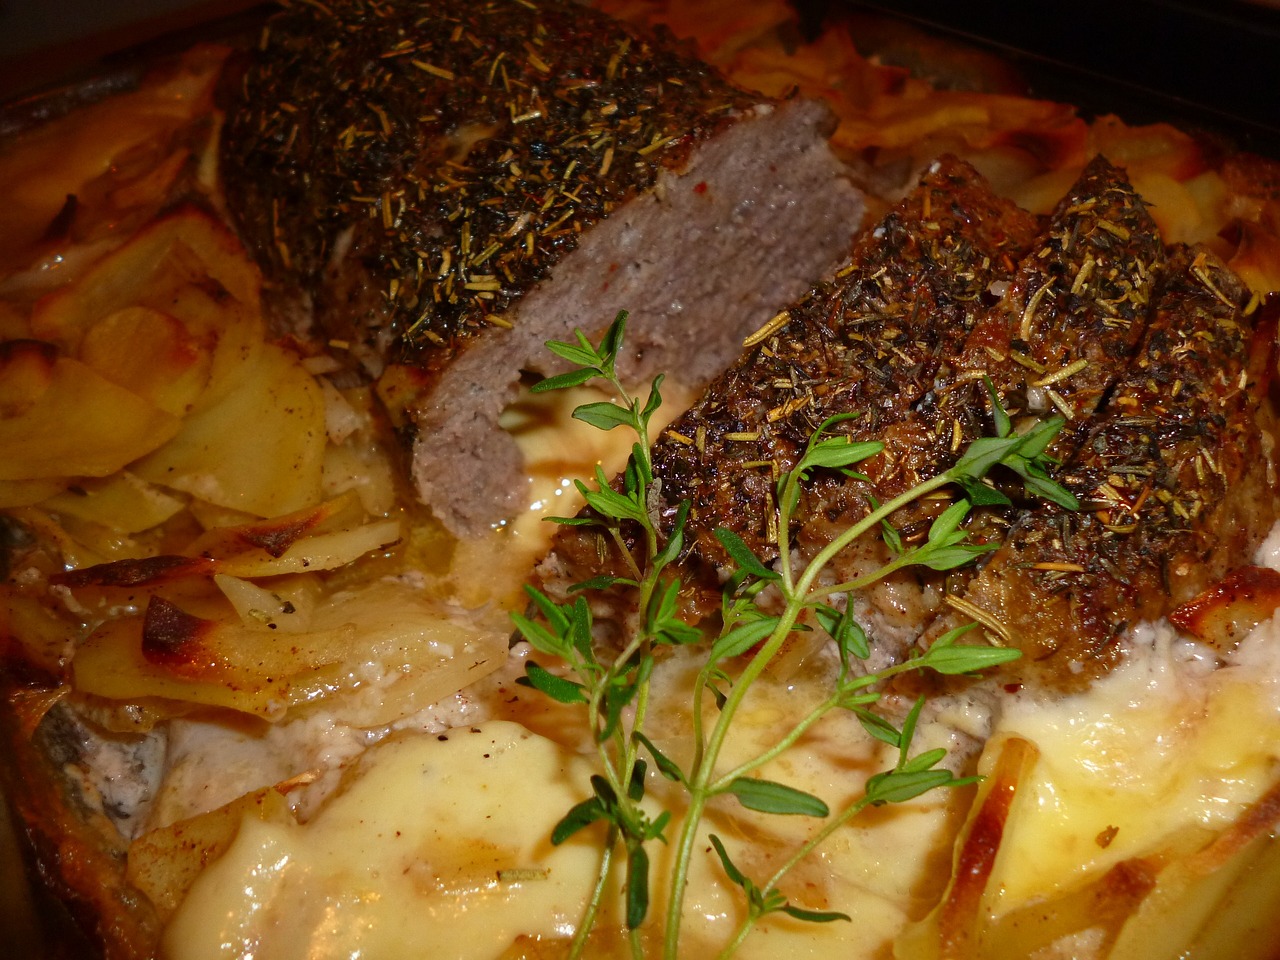 A meatloaf and potato dinner | Source: Pixabay